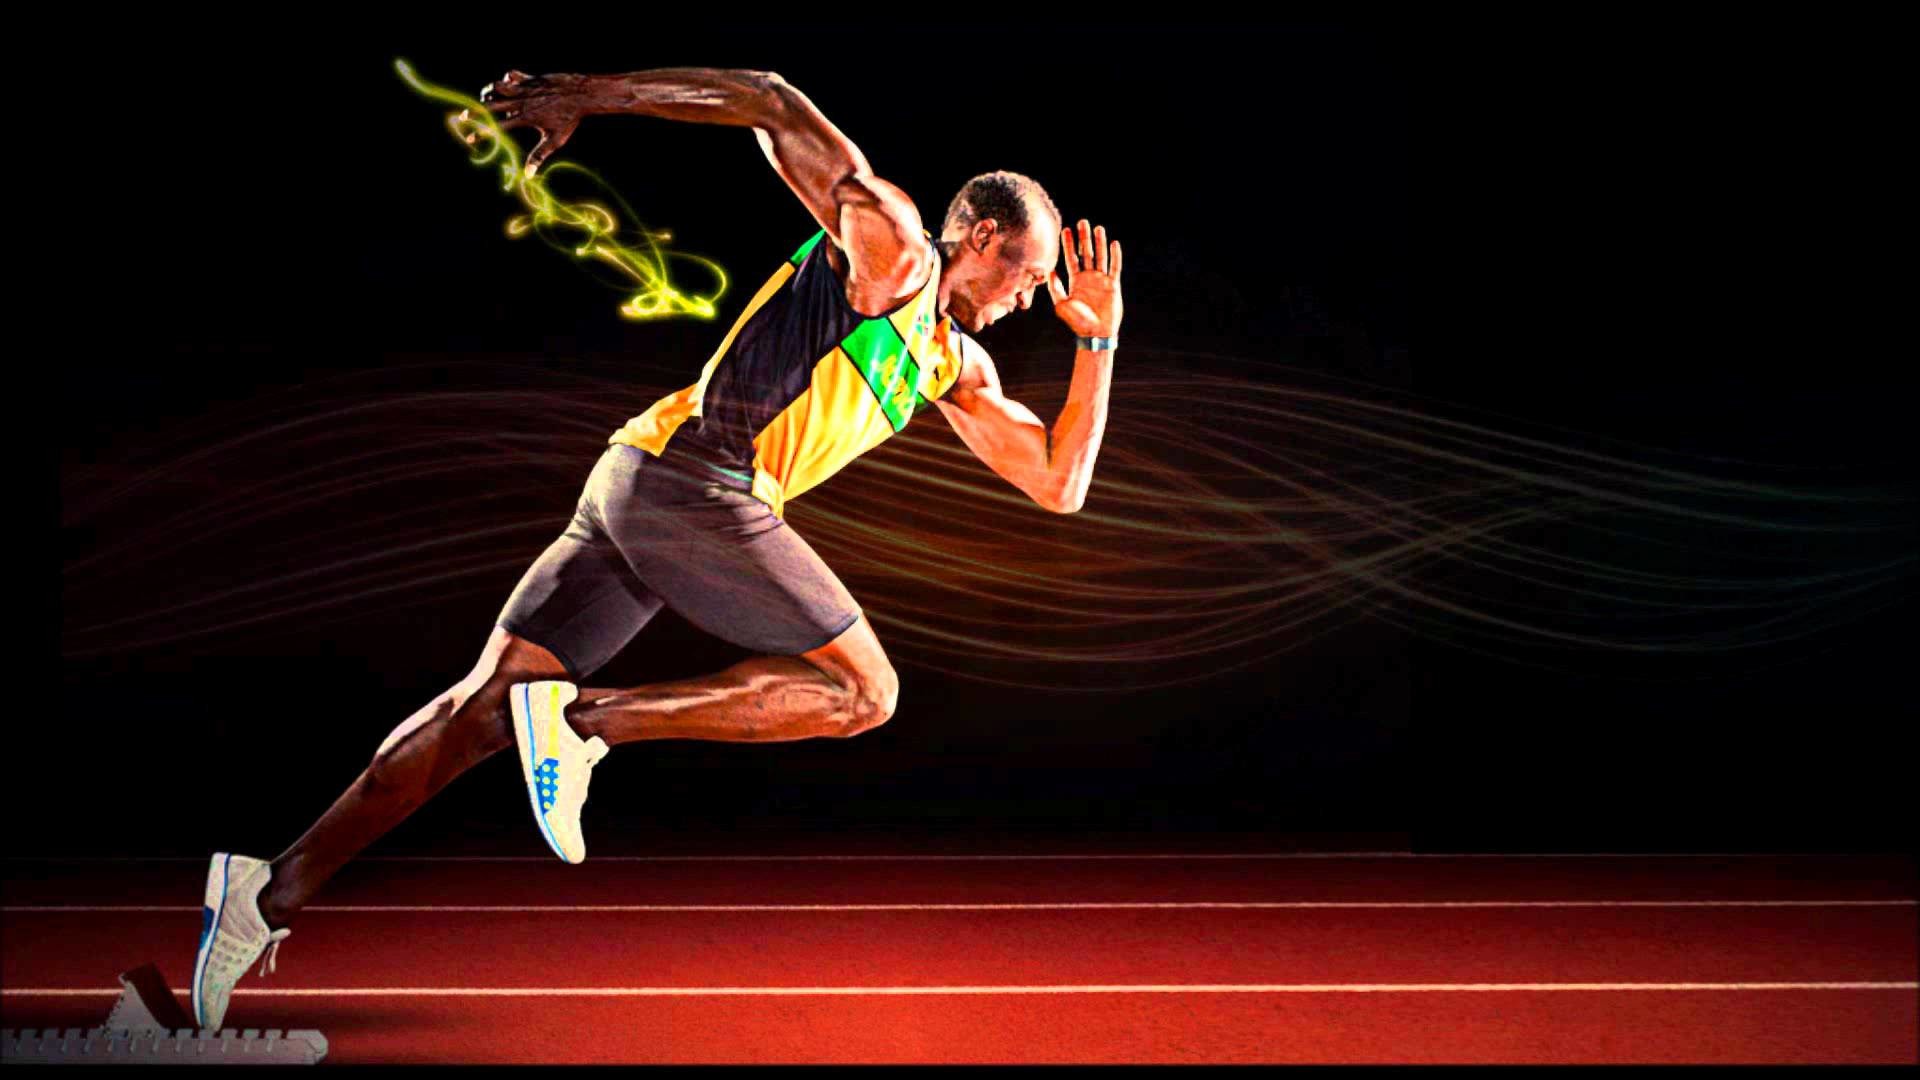 Usain Bolt Wallpaper Image